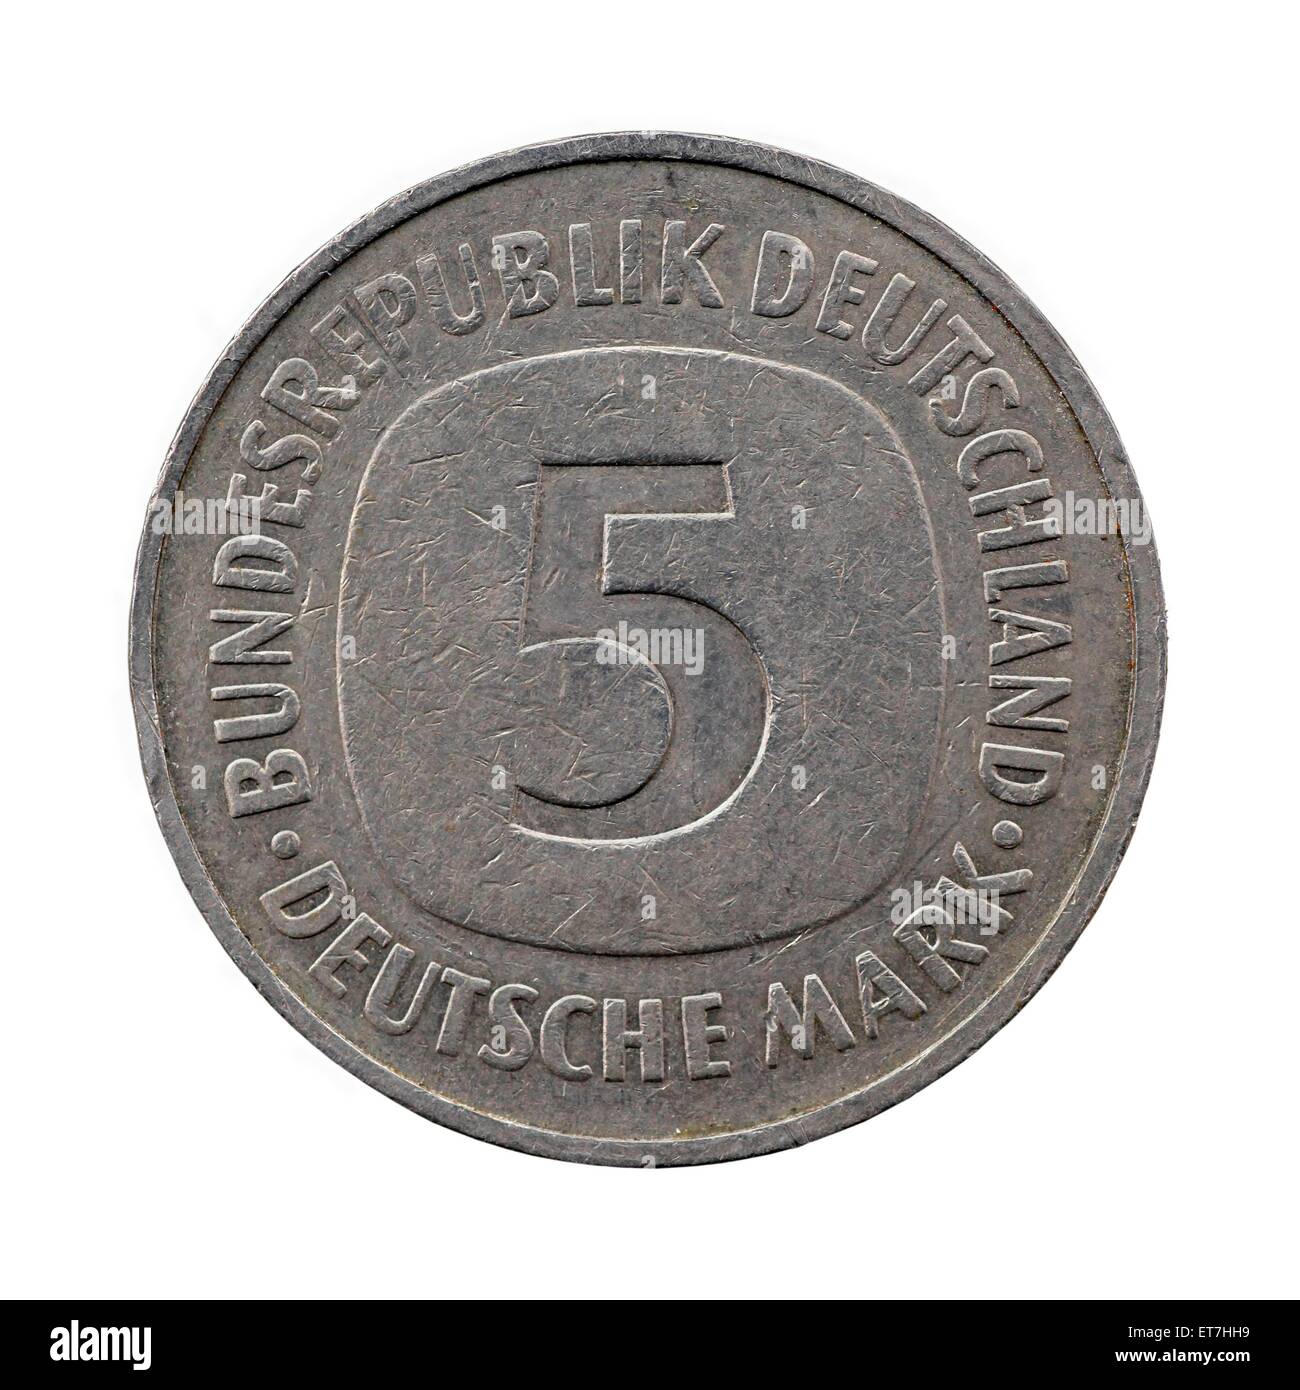 5-Mark-Stueck, Vorderseite, Deutschland | 5 mark coin, front side, Germany Stock Photo